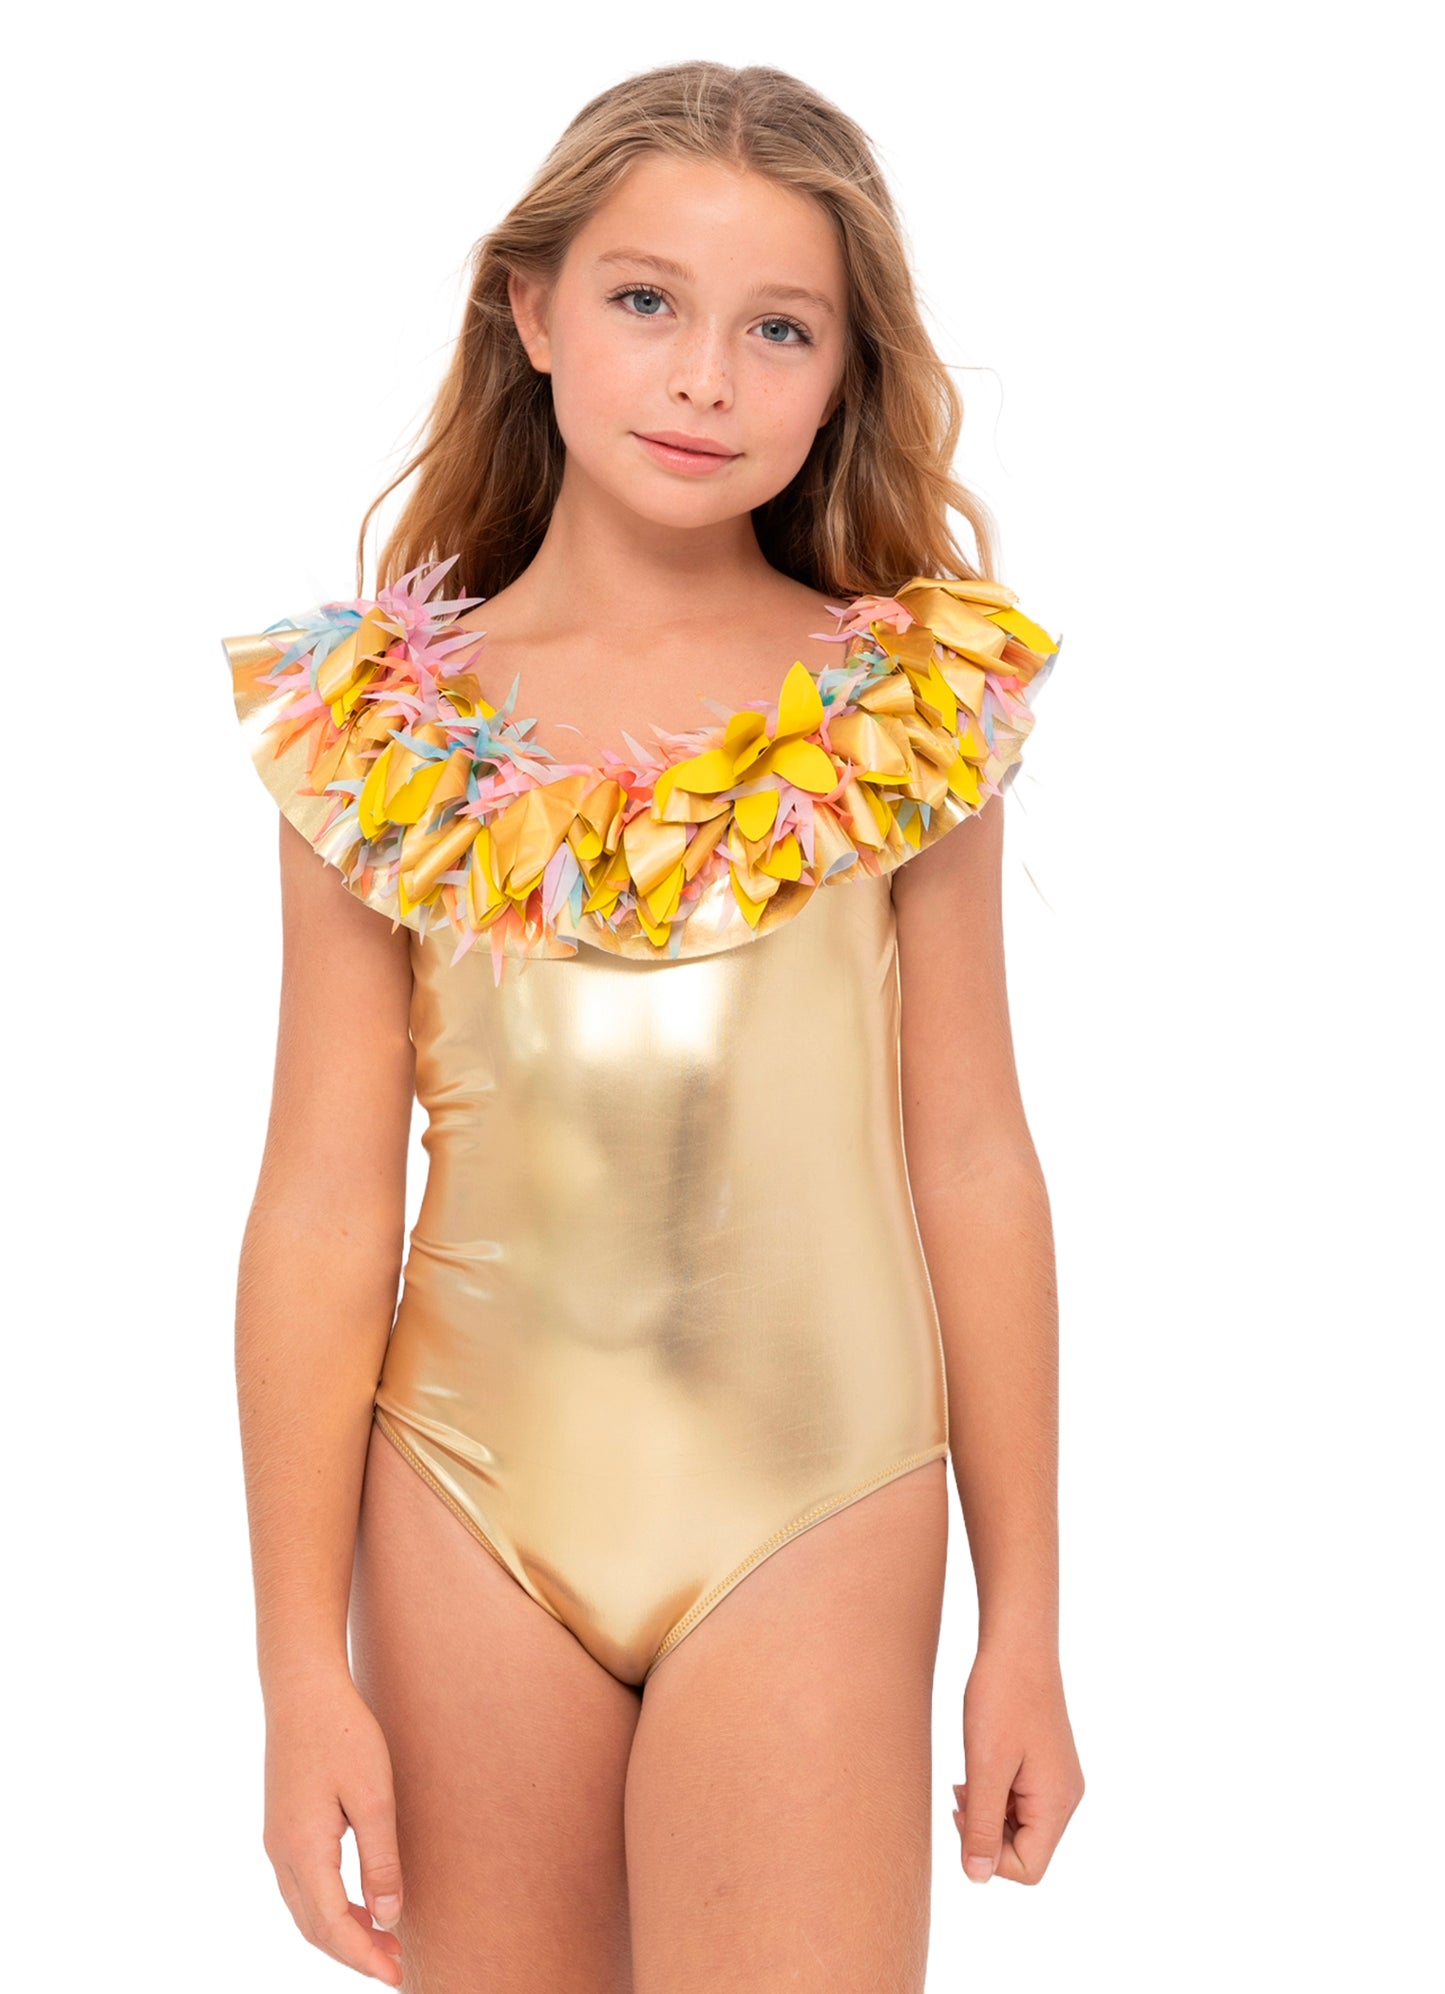 gold swimsuit for girls, gold swimwear for girls, gold bathing suit for girls, swimwear for teen girls